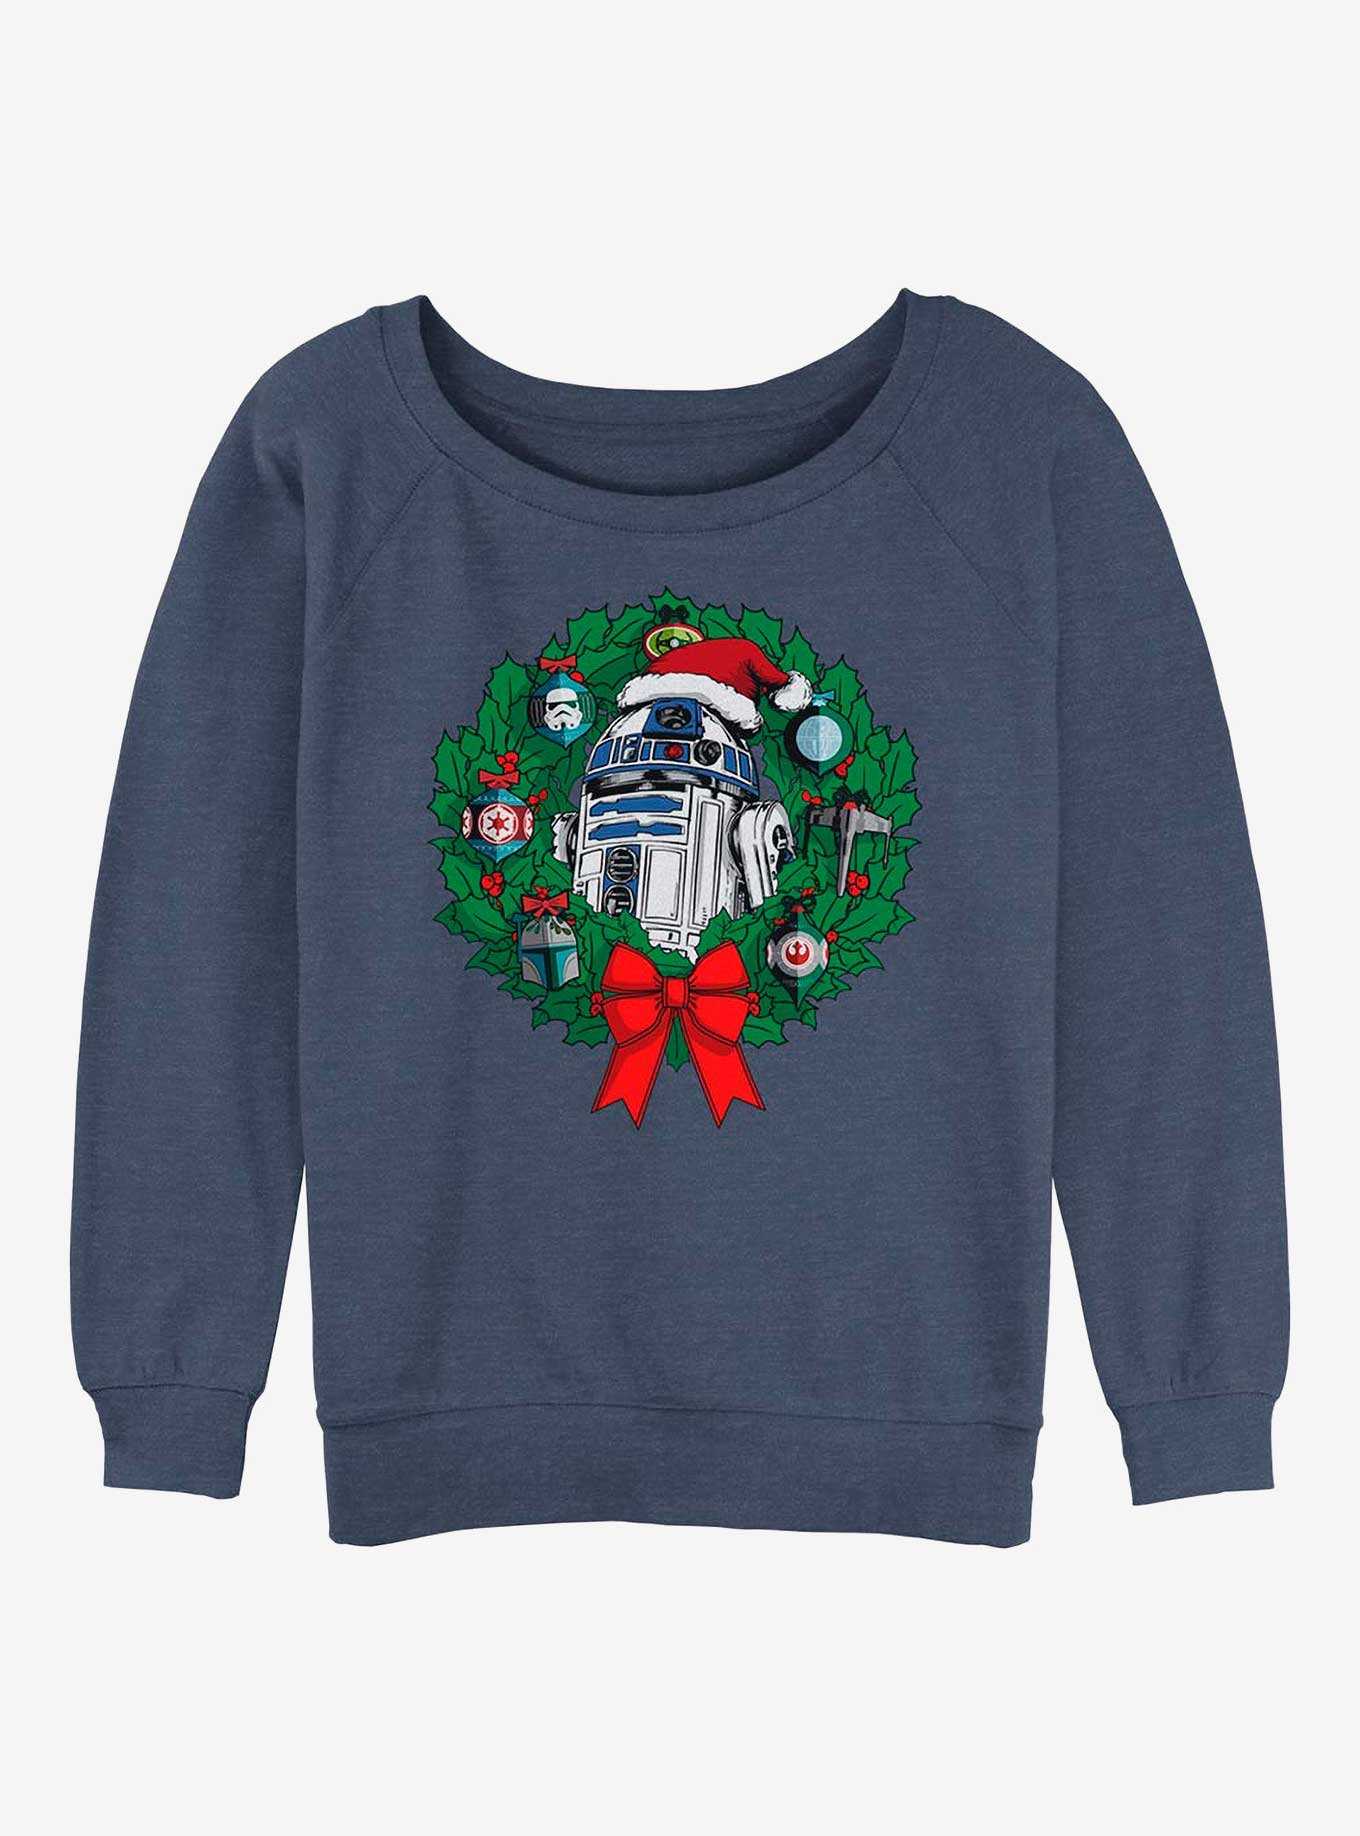 Star Wars R2-D2 Wreath Girls Slouchy Sweatshirt, , hi-res